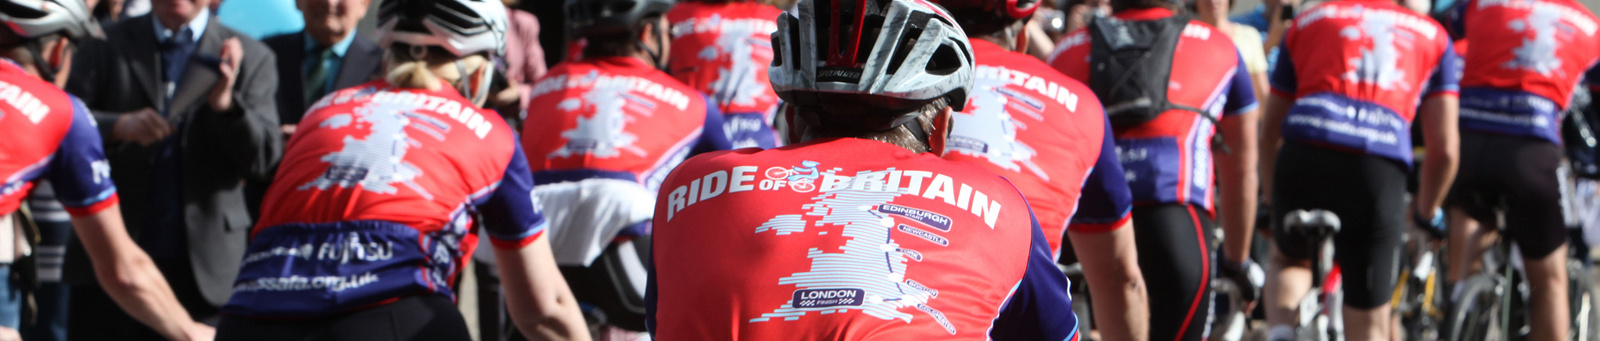 Ride of Britain banner